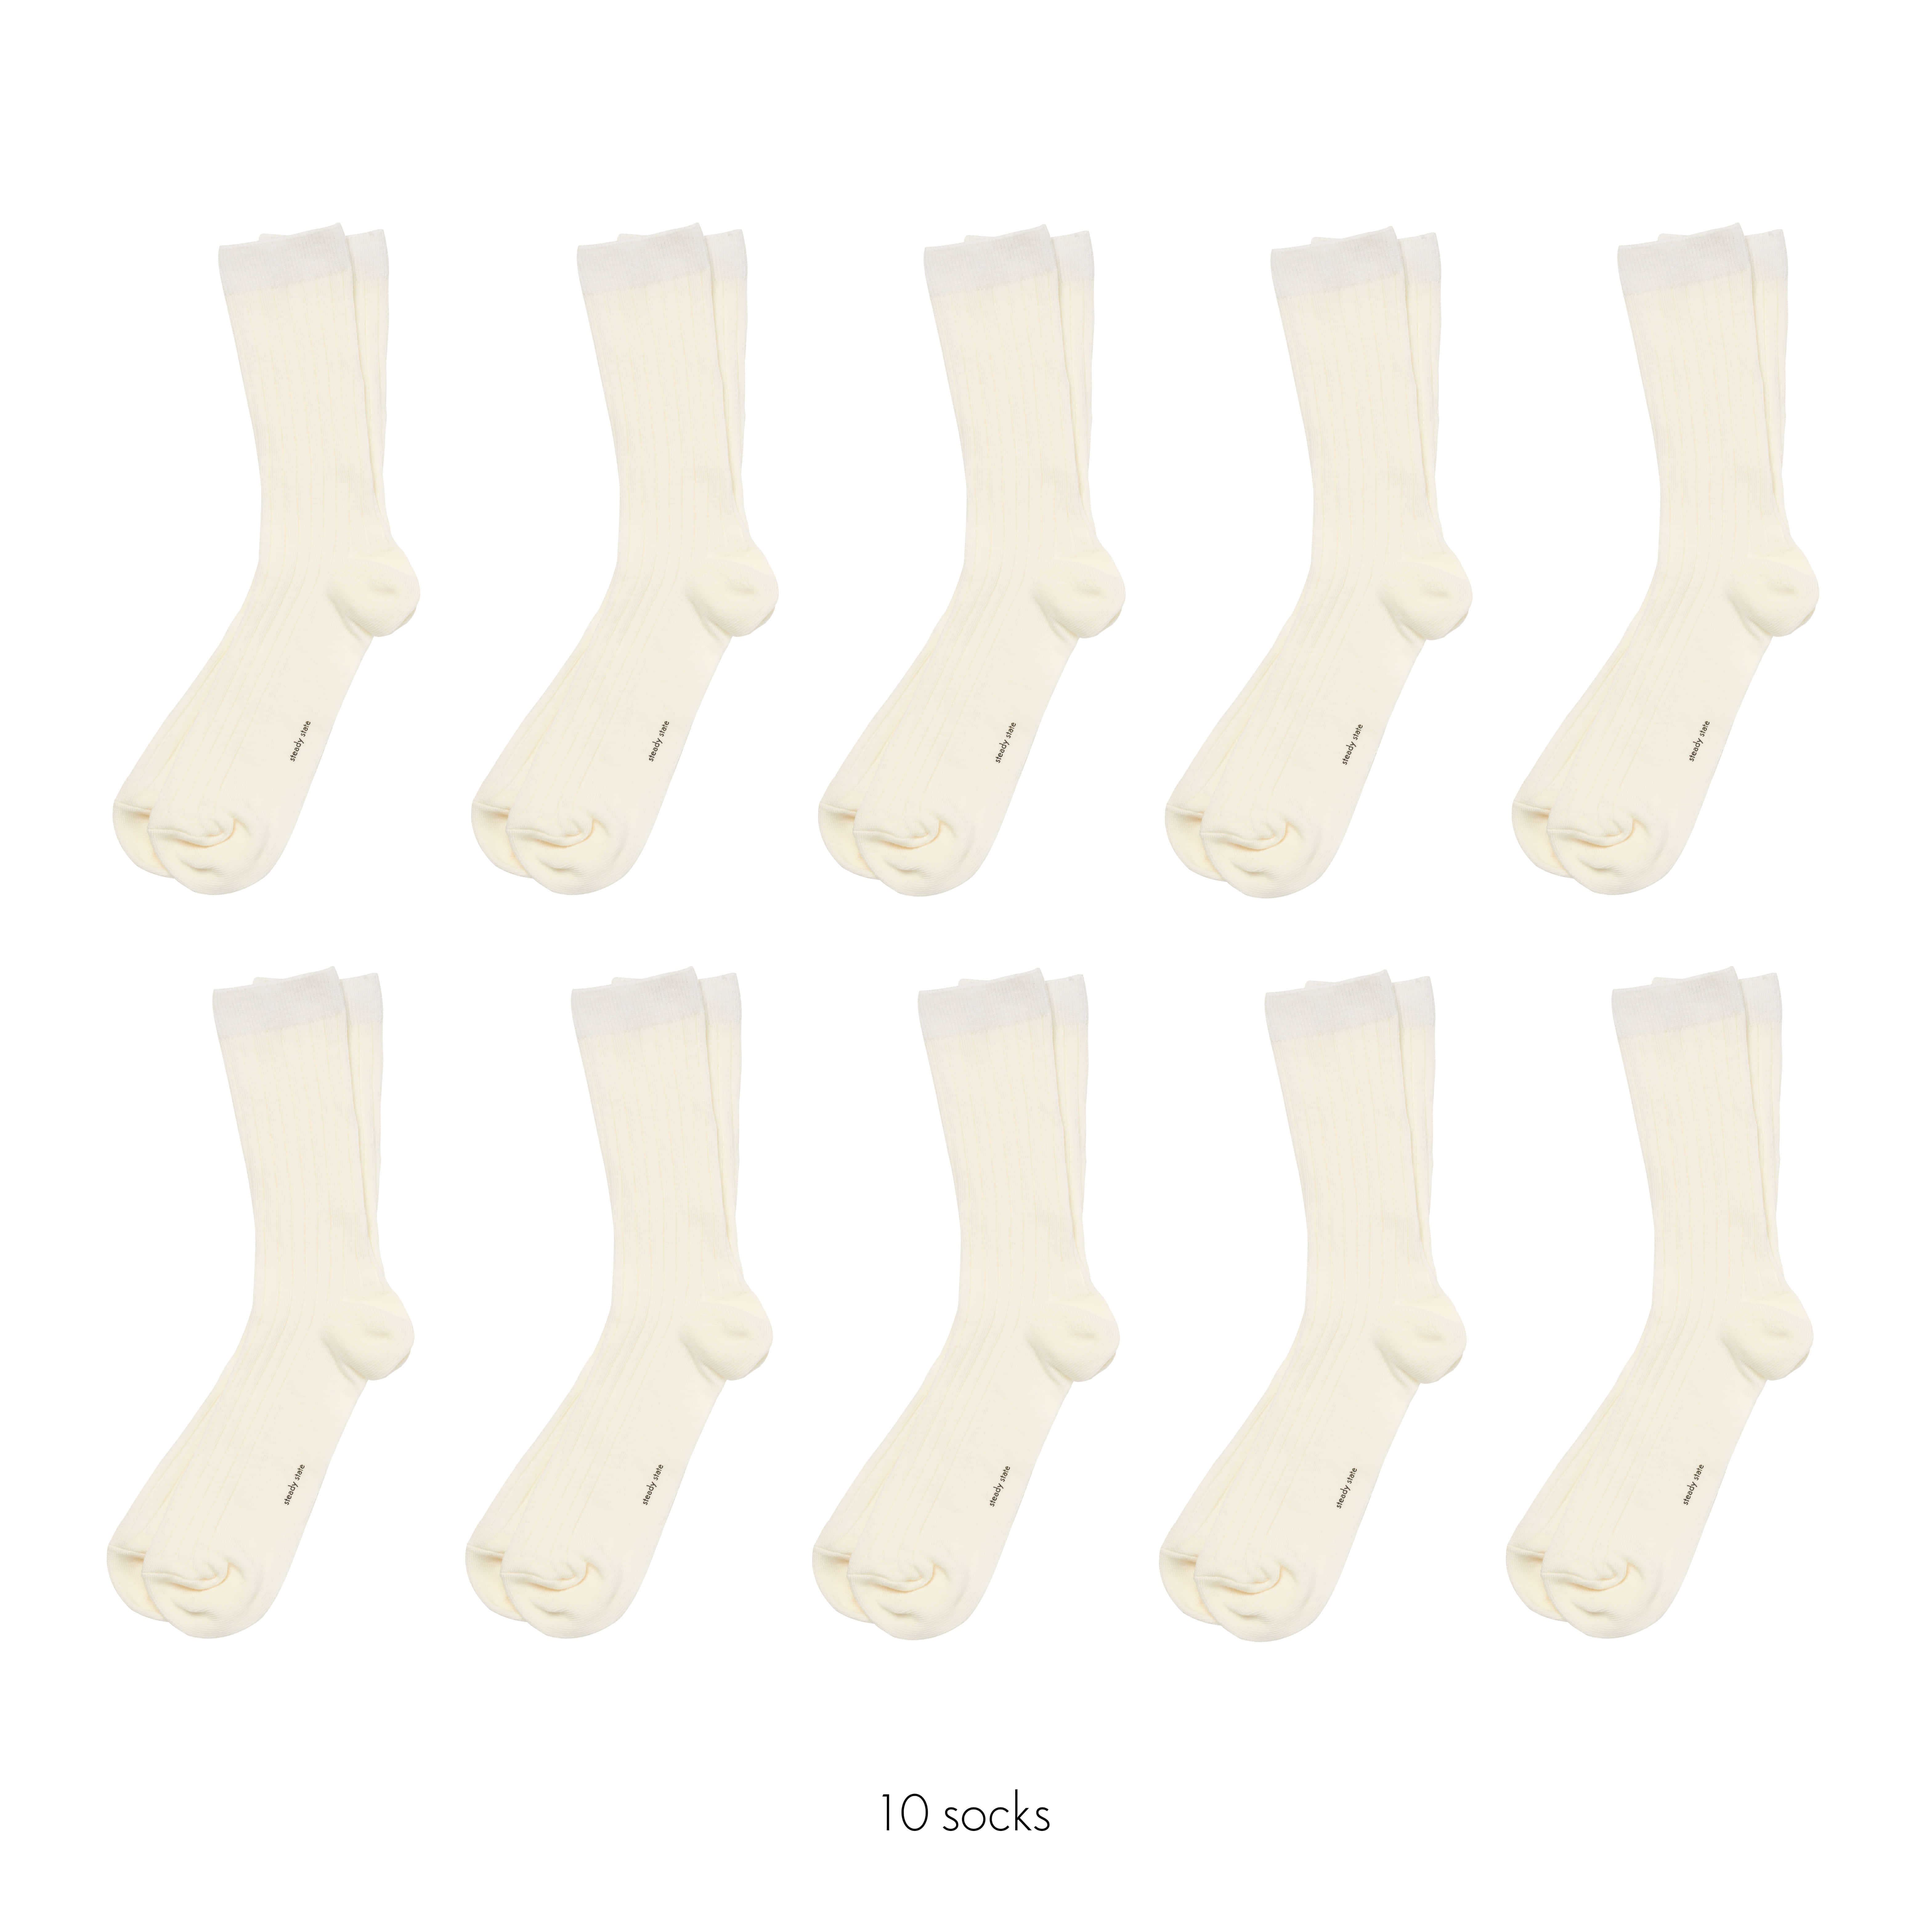 10 Socks Cotton Creamy